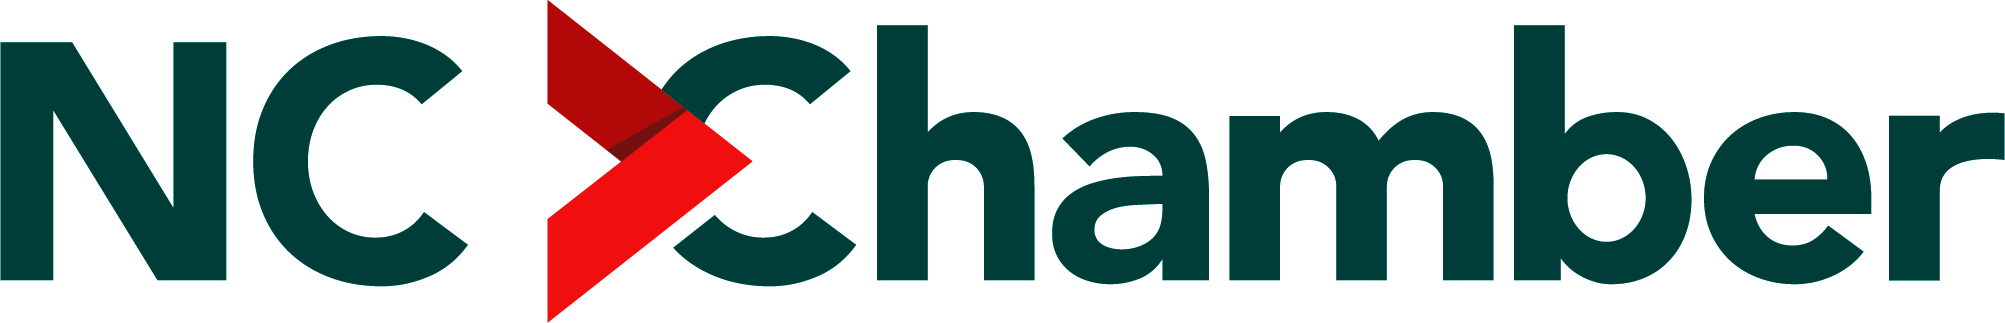 NC Chamber Logo